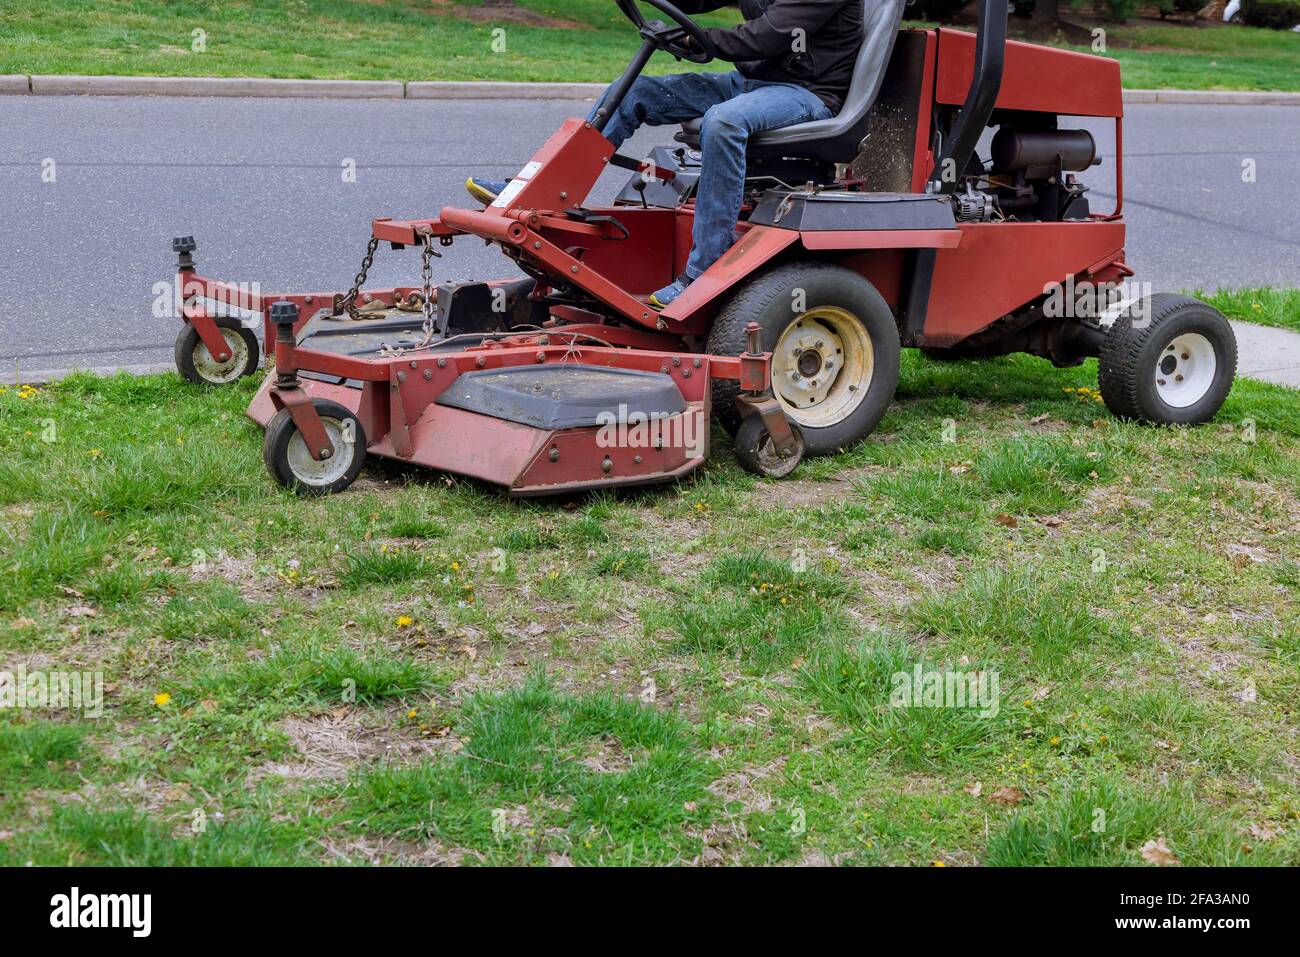 Lawn mower cutting green grass in gardening backyard Stock Photo